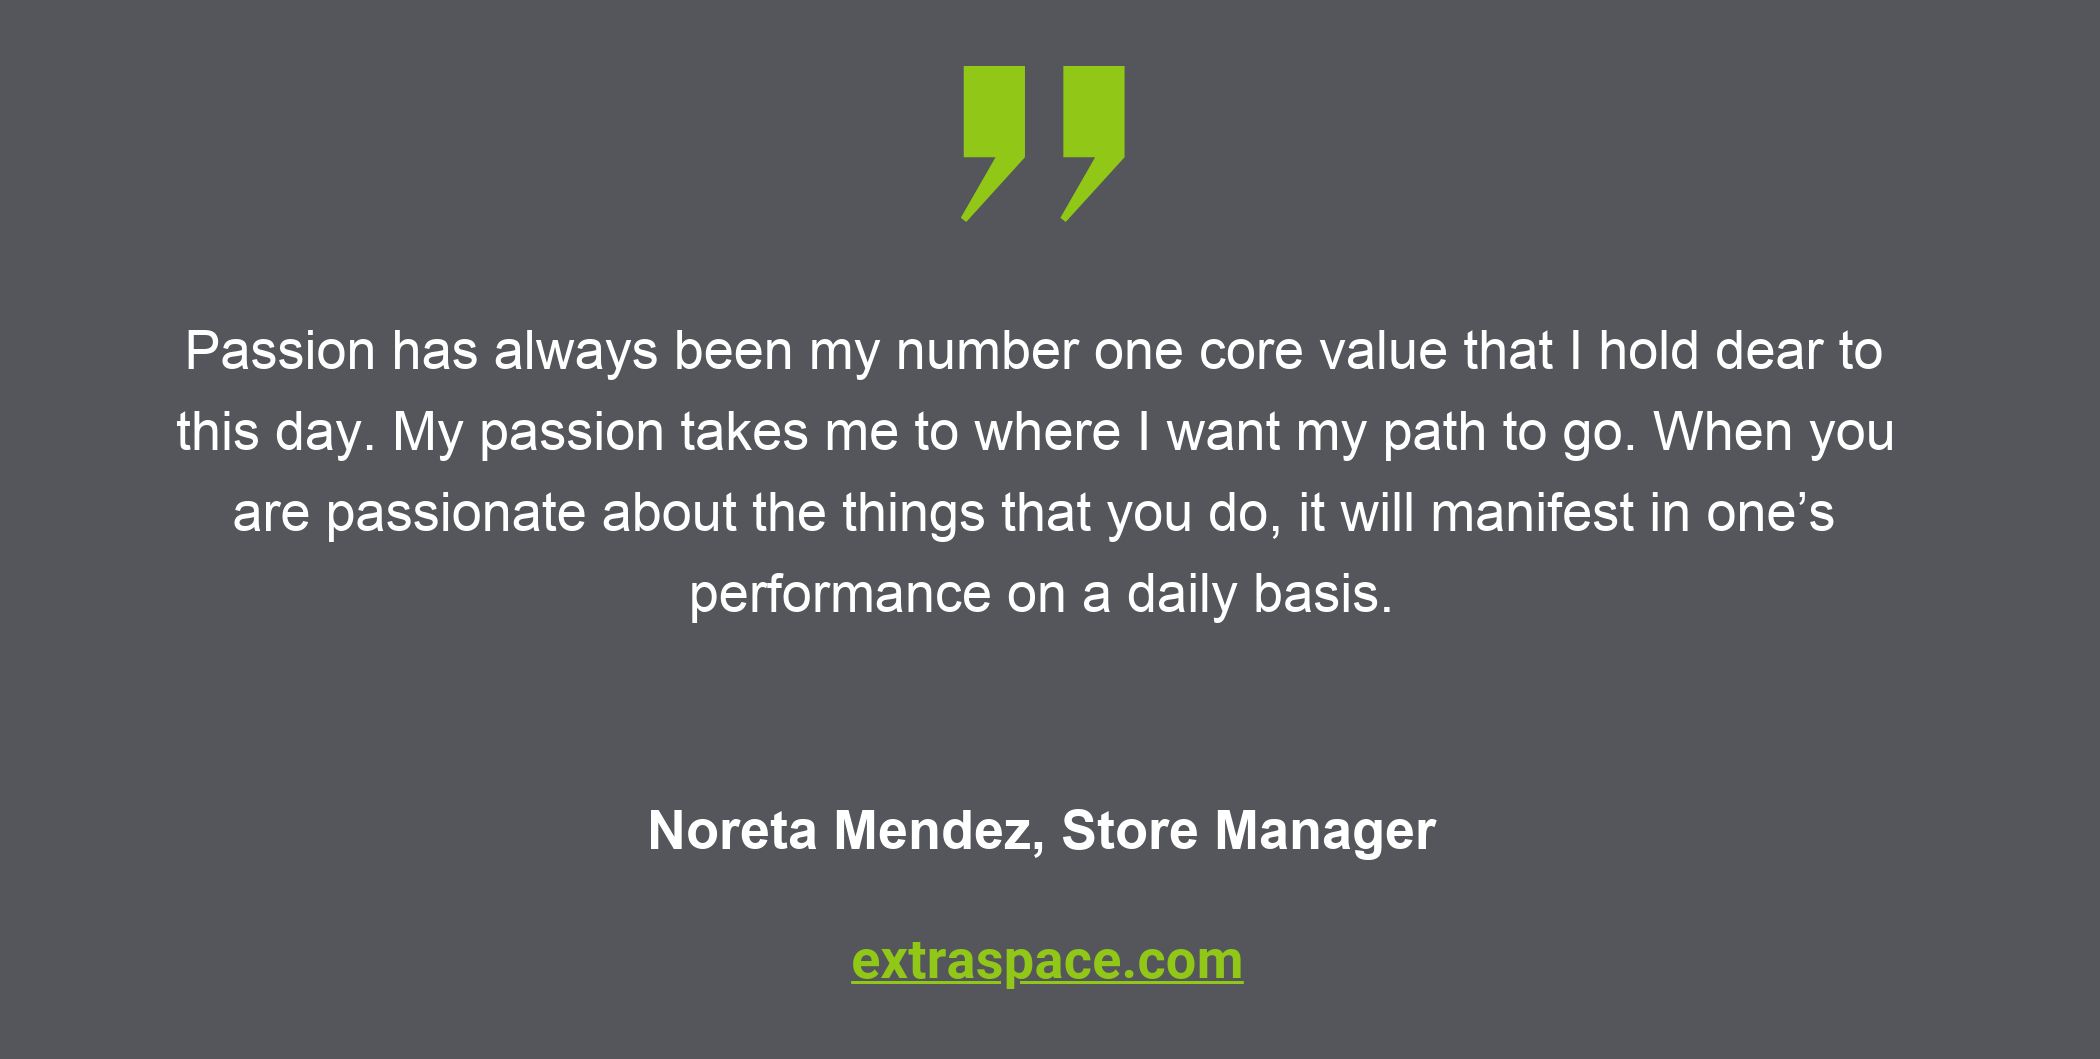 Noreta Mendez, Store Manager - 2022 Resolutions